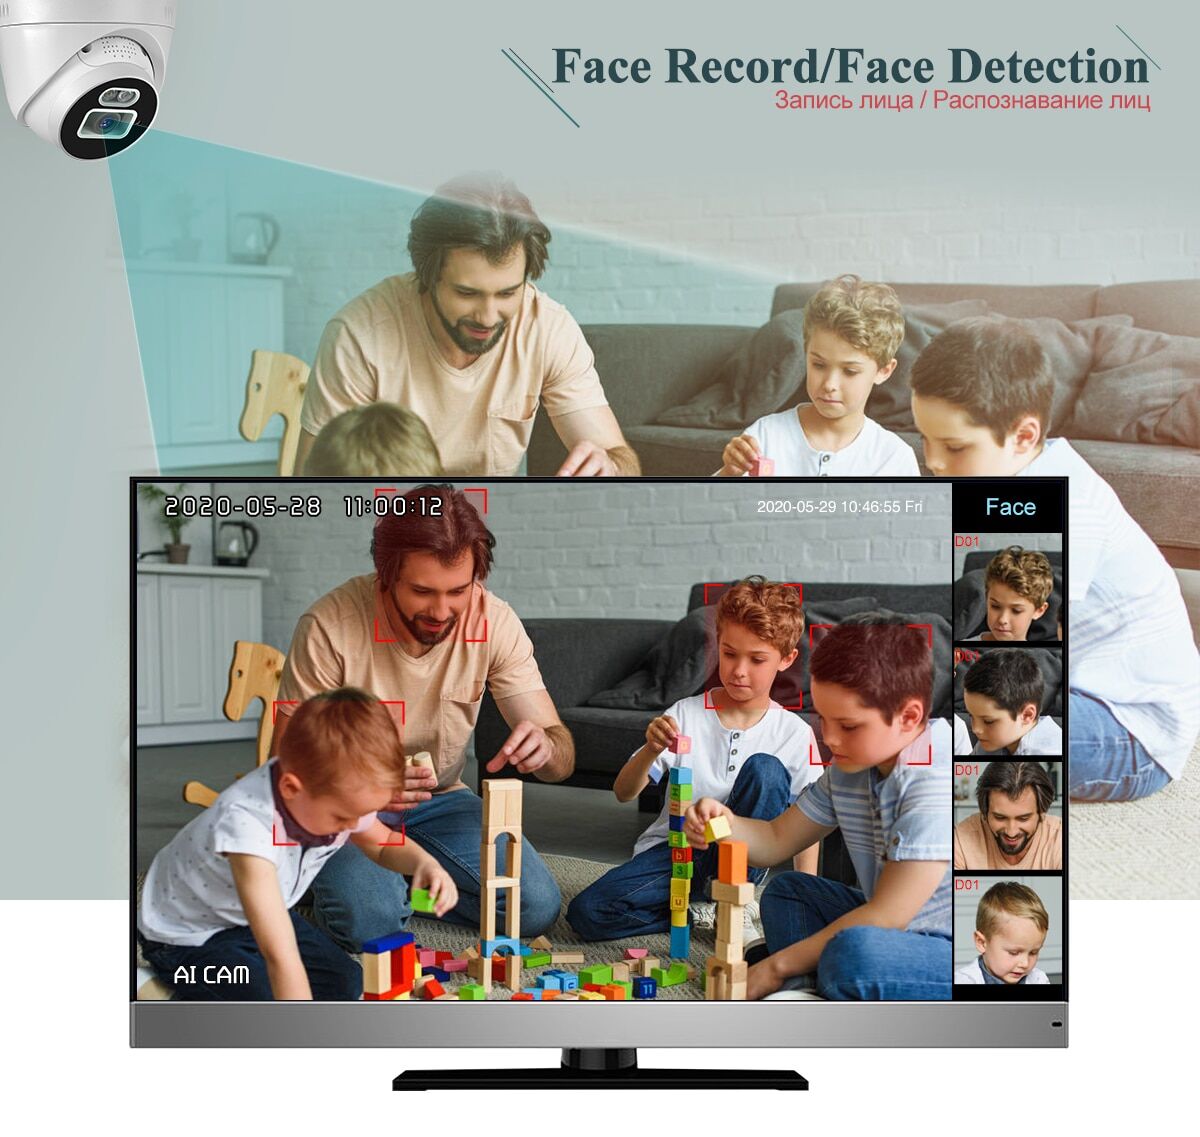 Indoor face detection cameras PoE Al 5MP NVR PTZ XMEYE Techage € 196,51